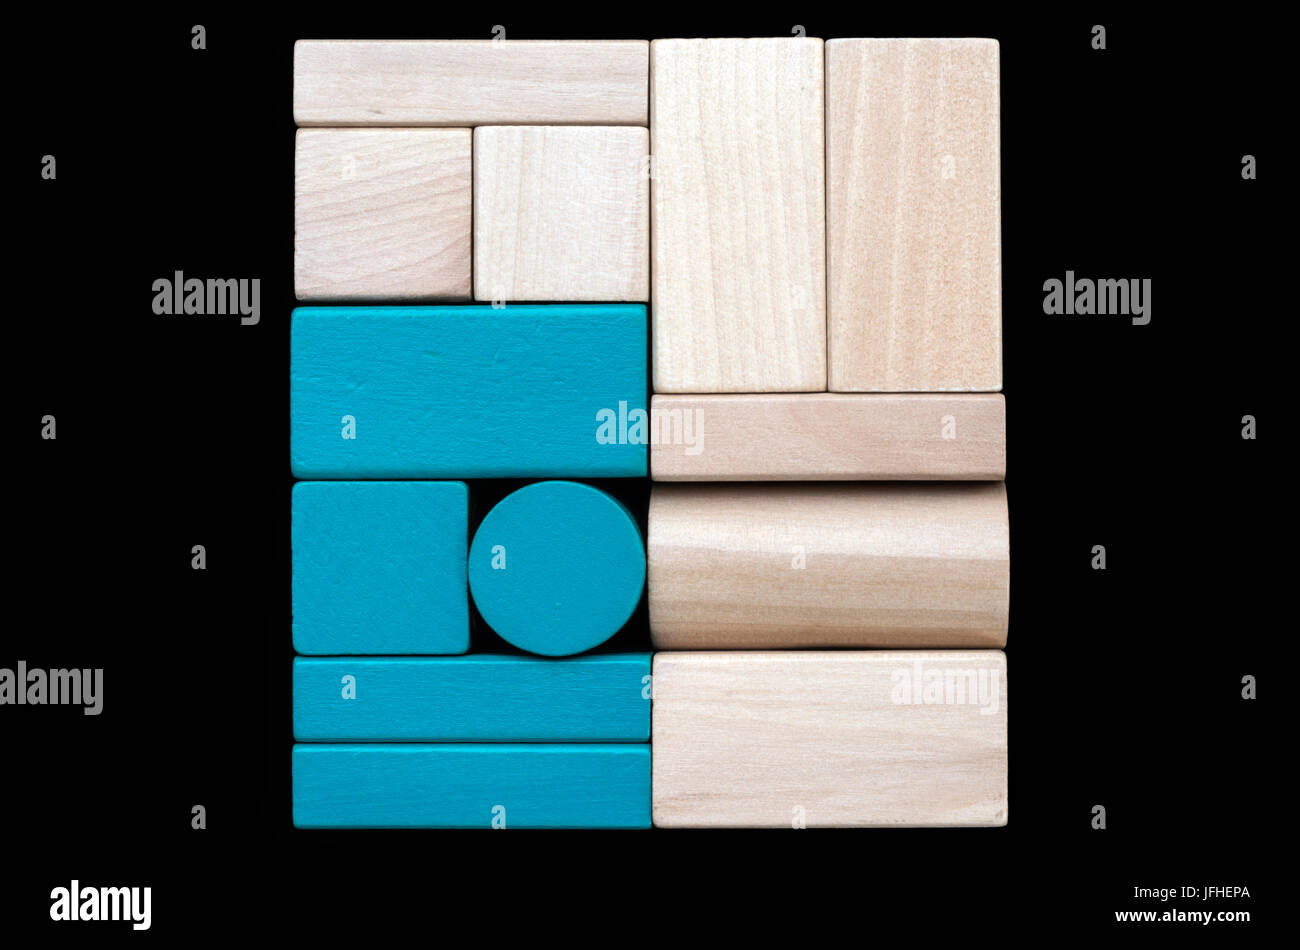 Minimalistic wooden blocks sorted on black background Stock Photo